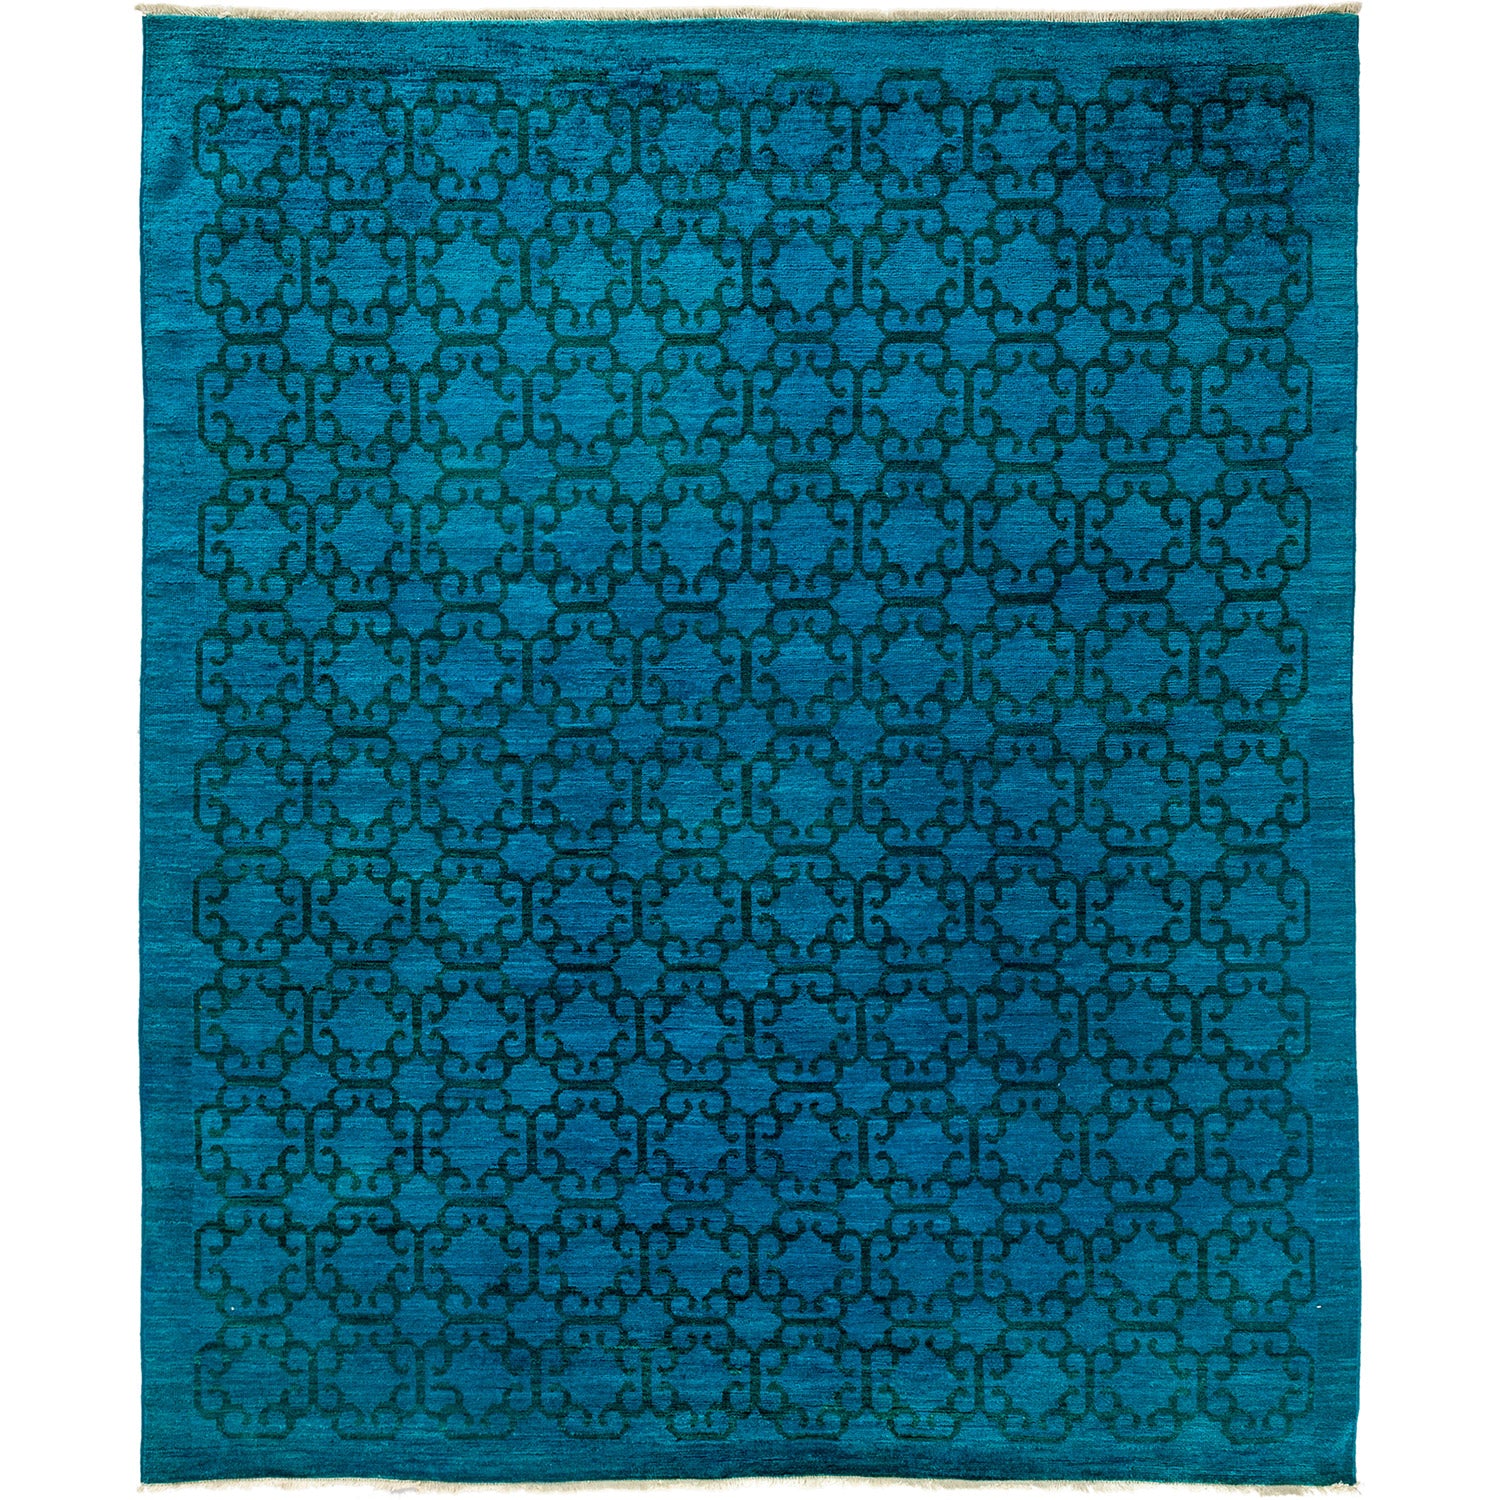 Vibrant blue rectangular textile with interlocking lattice pattern design.